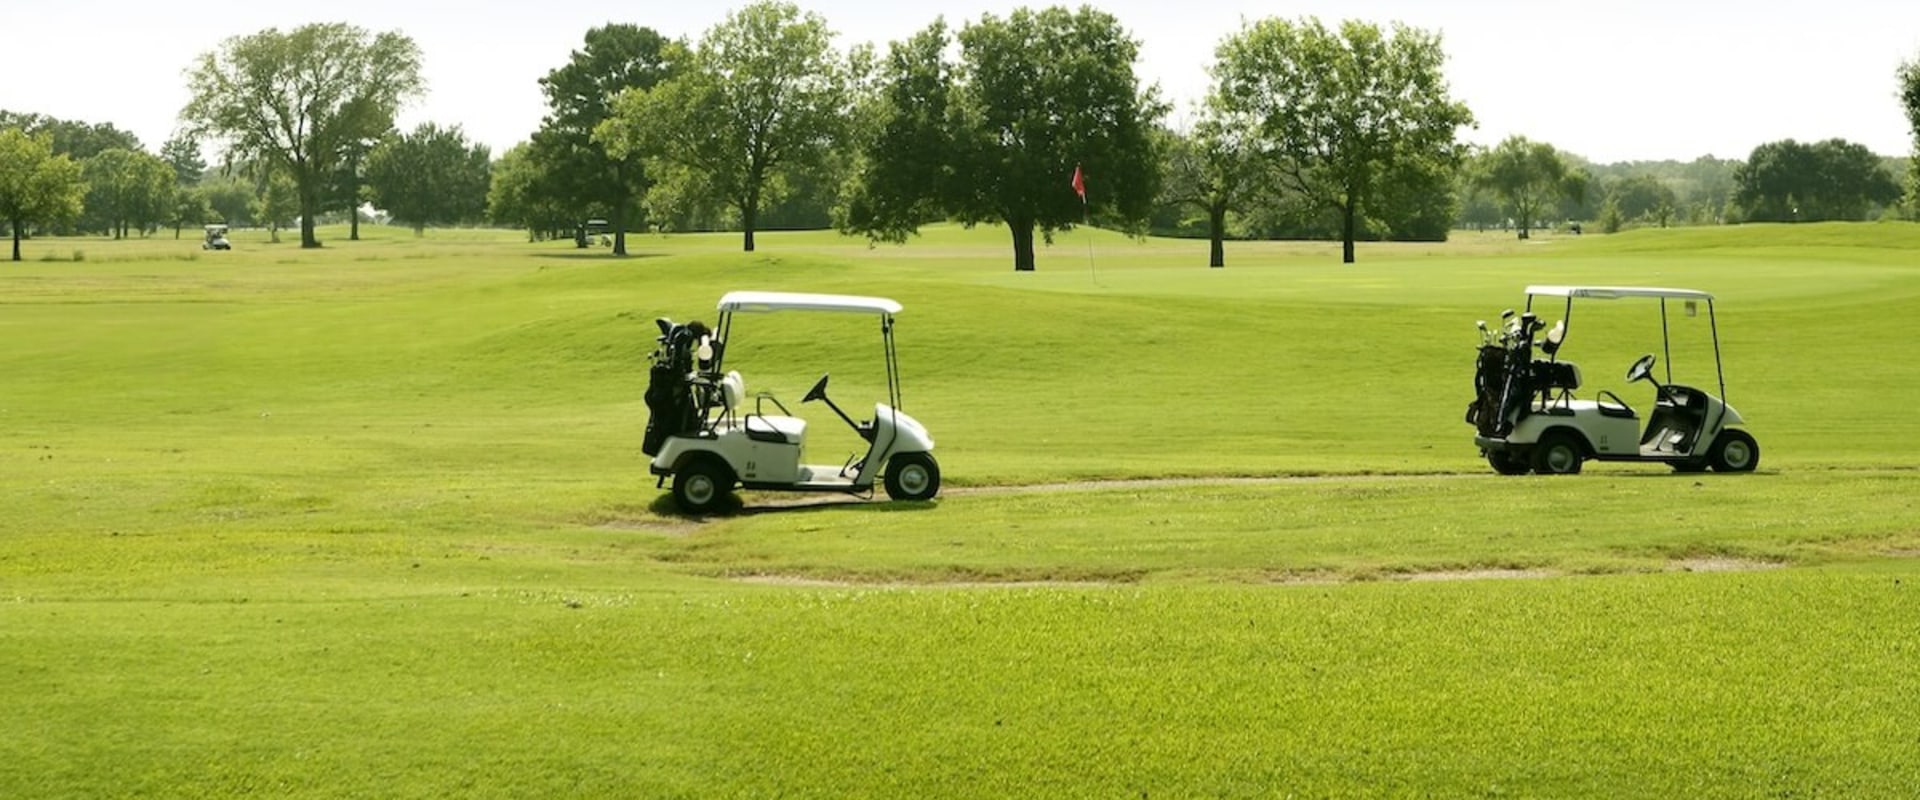 Golfing Getaways in Central Texas: The Best Courses Near a Rental Villa